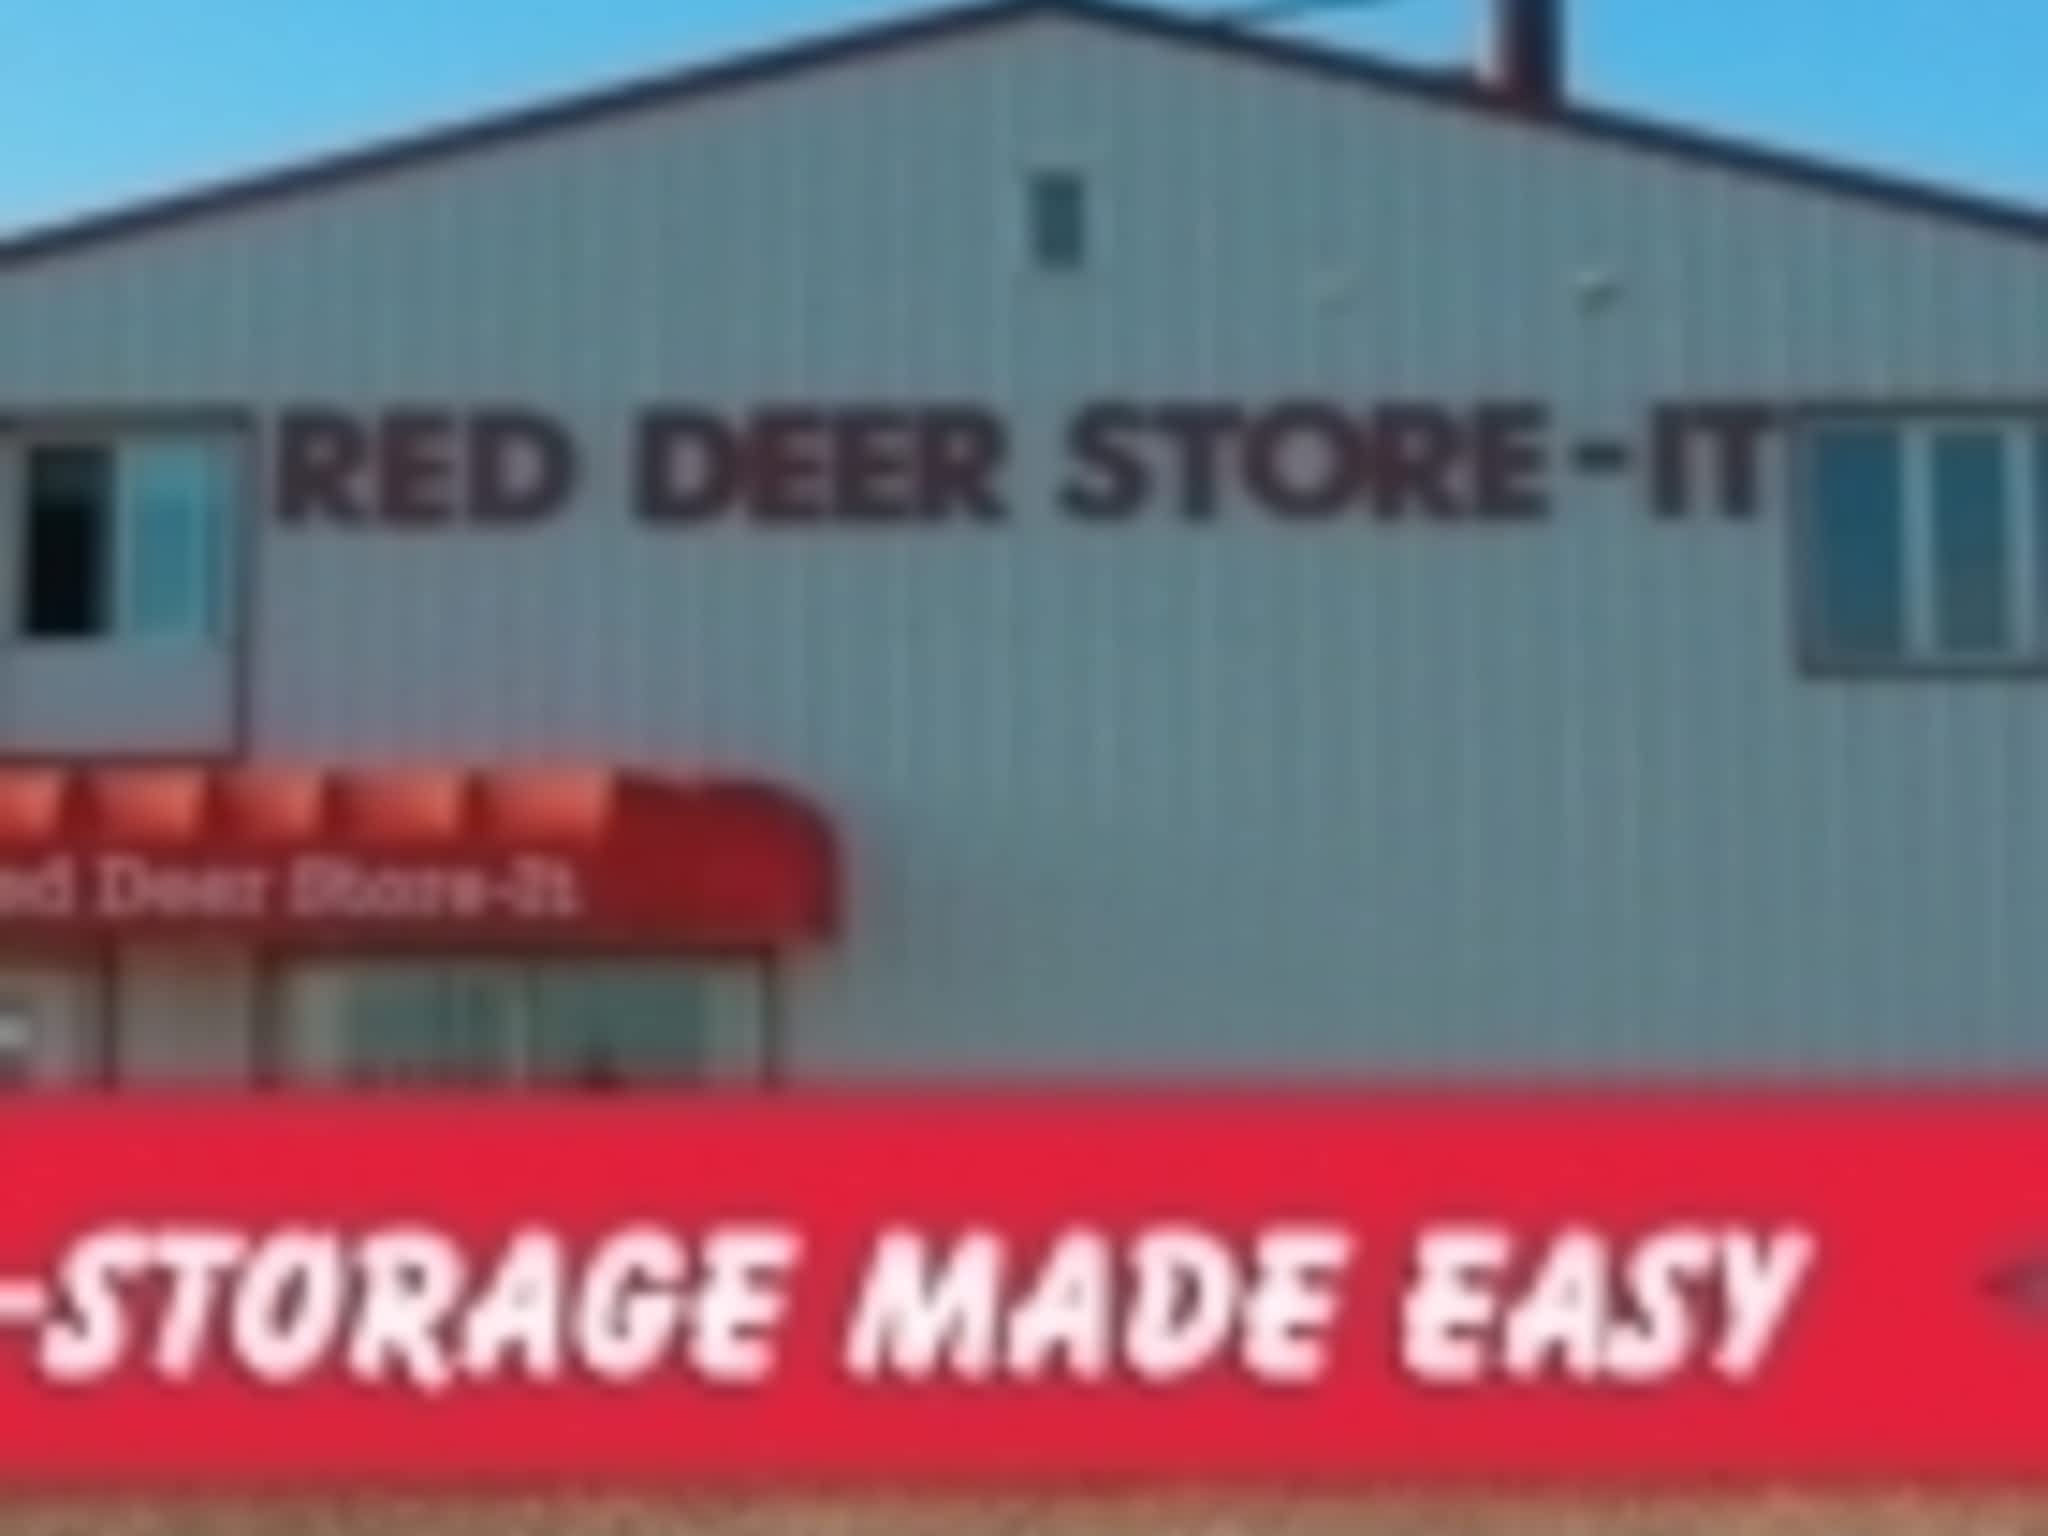 photo Red Deer Store-It